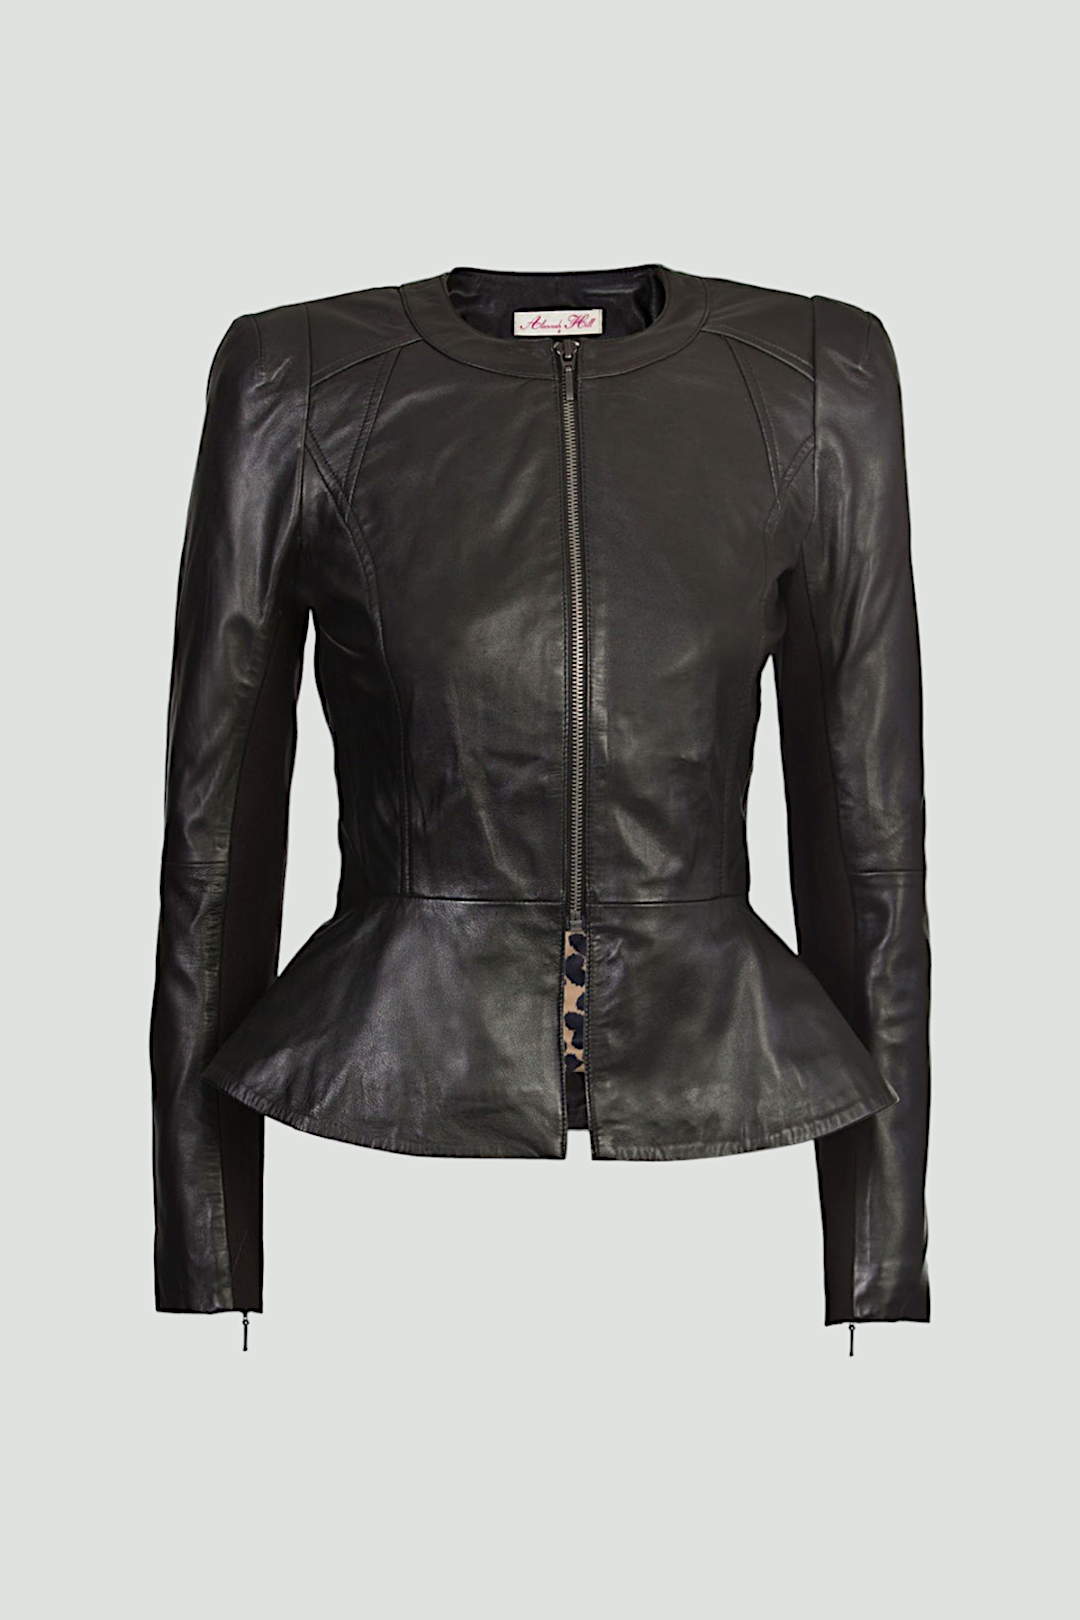 Alannah Hill Black My Femme Fatale Leather Jacket